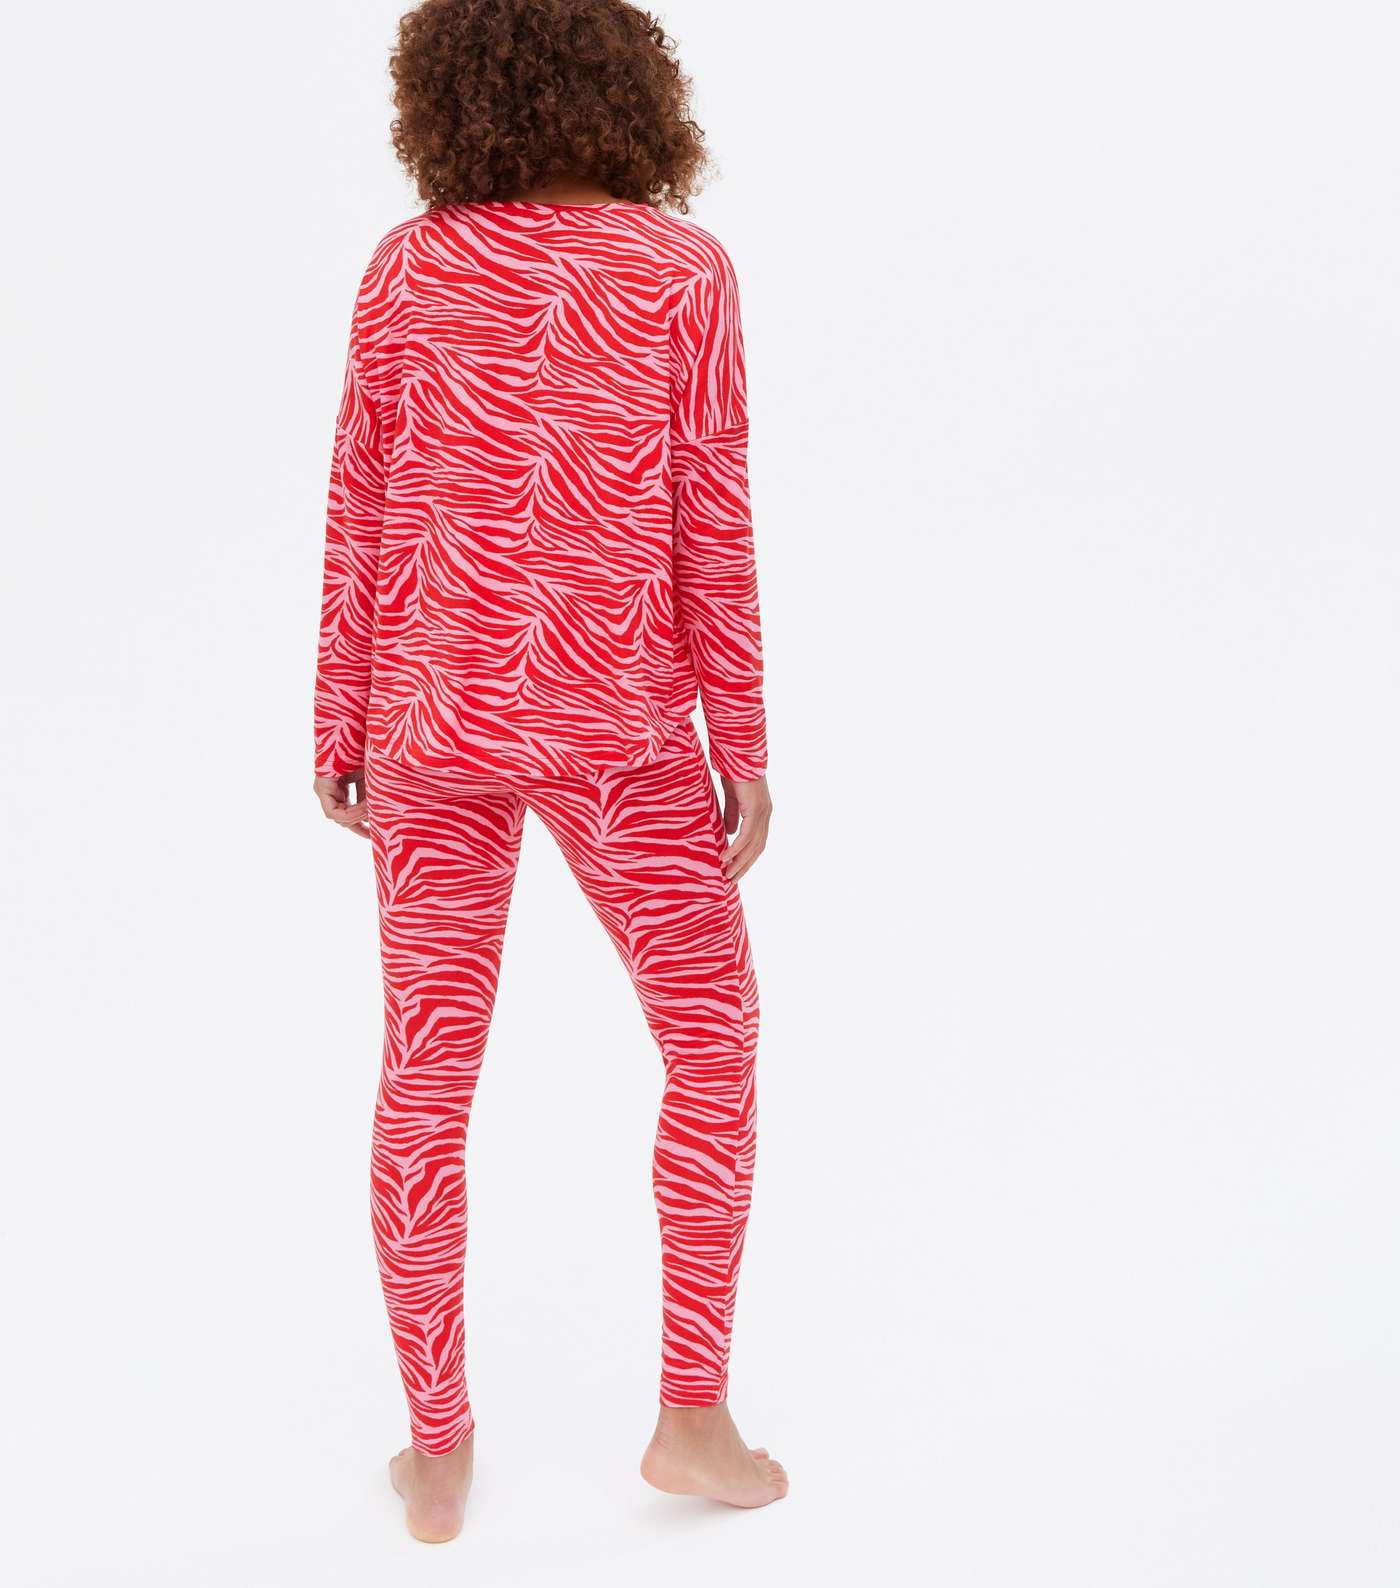 Red Zebra Print Soft Touch Legging Pyjama Set Image 4